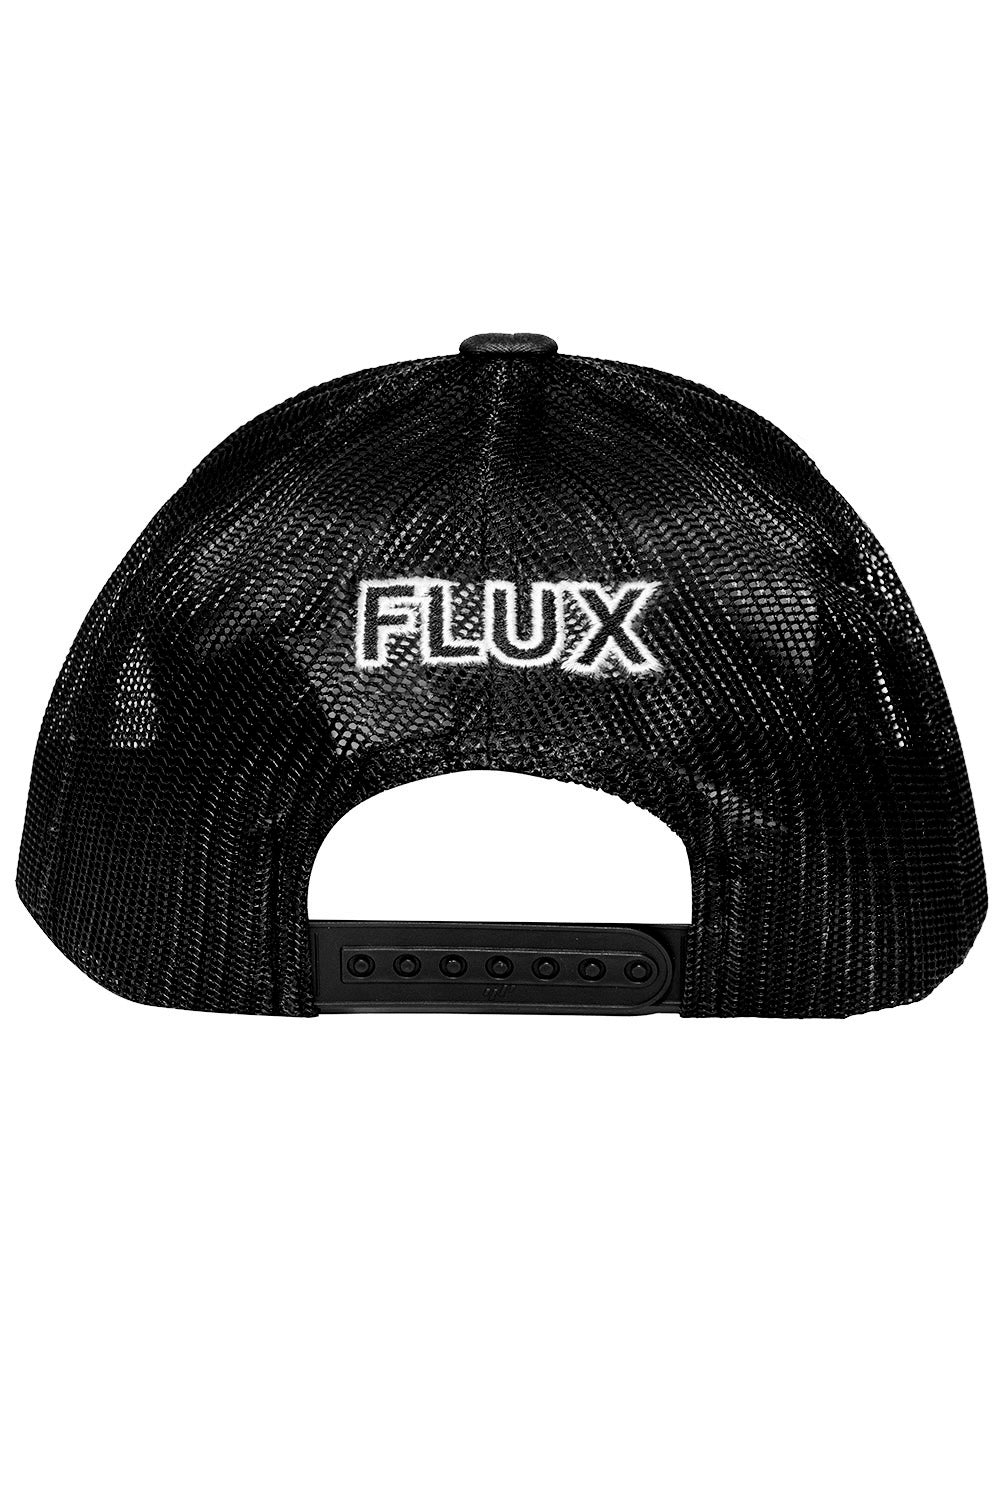 Flux Logo Cap - Black/Black